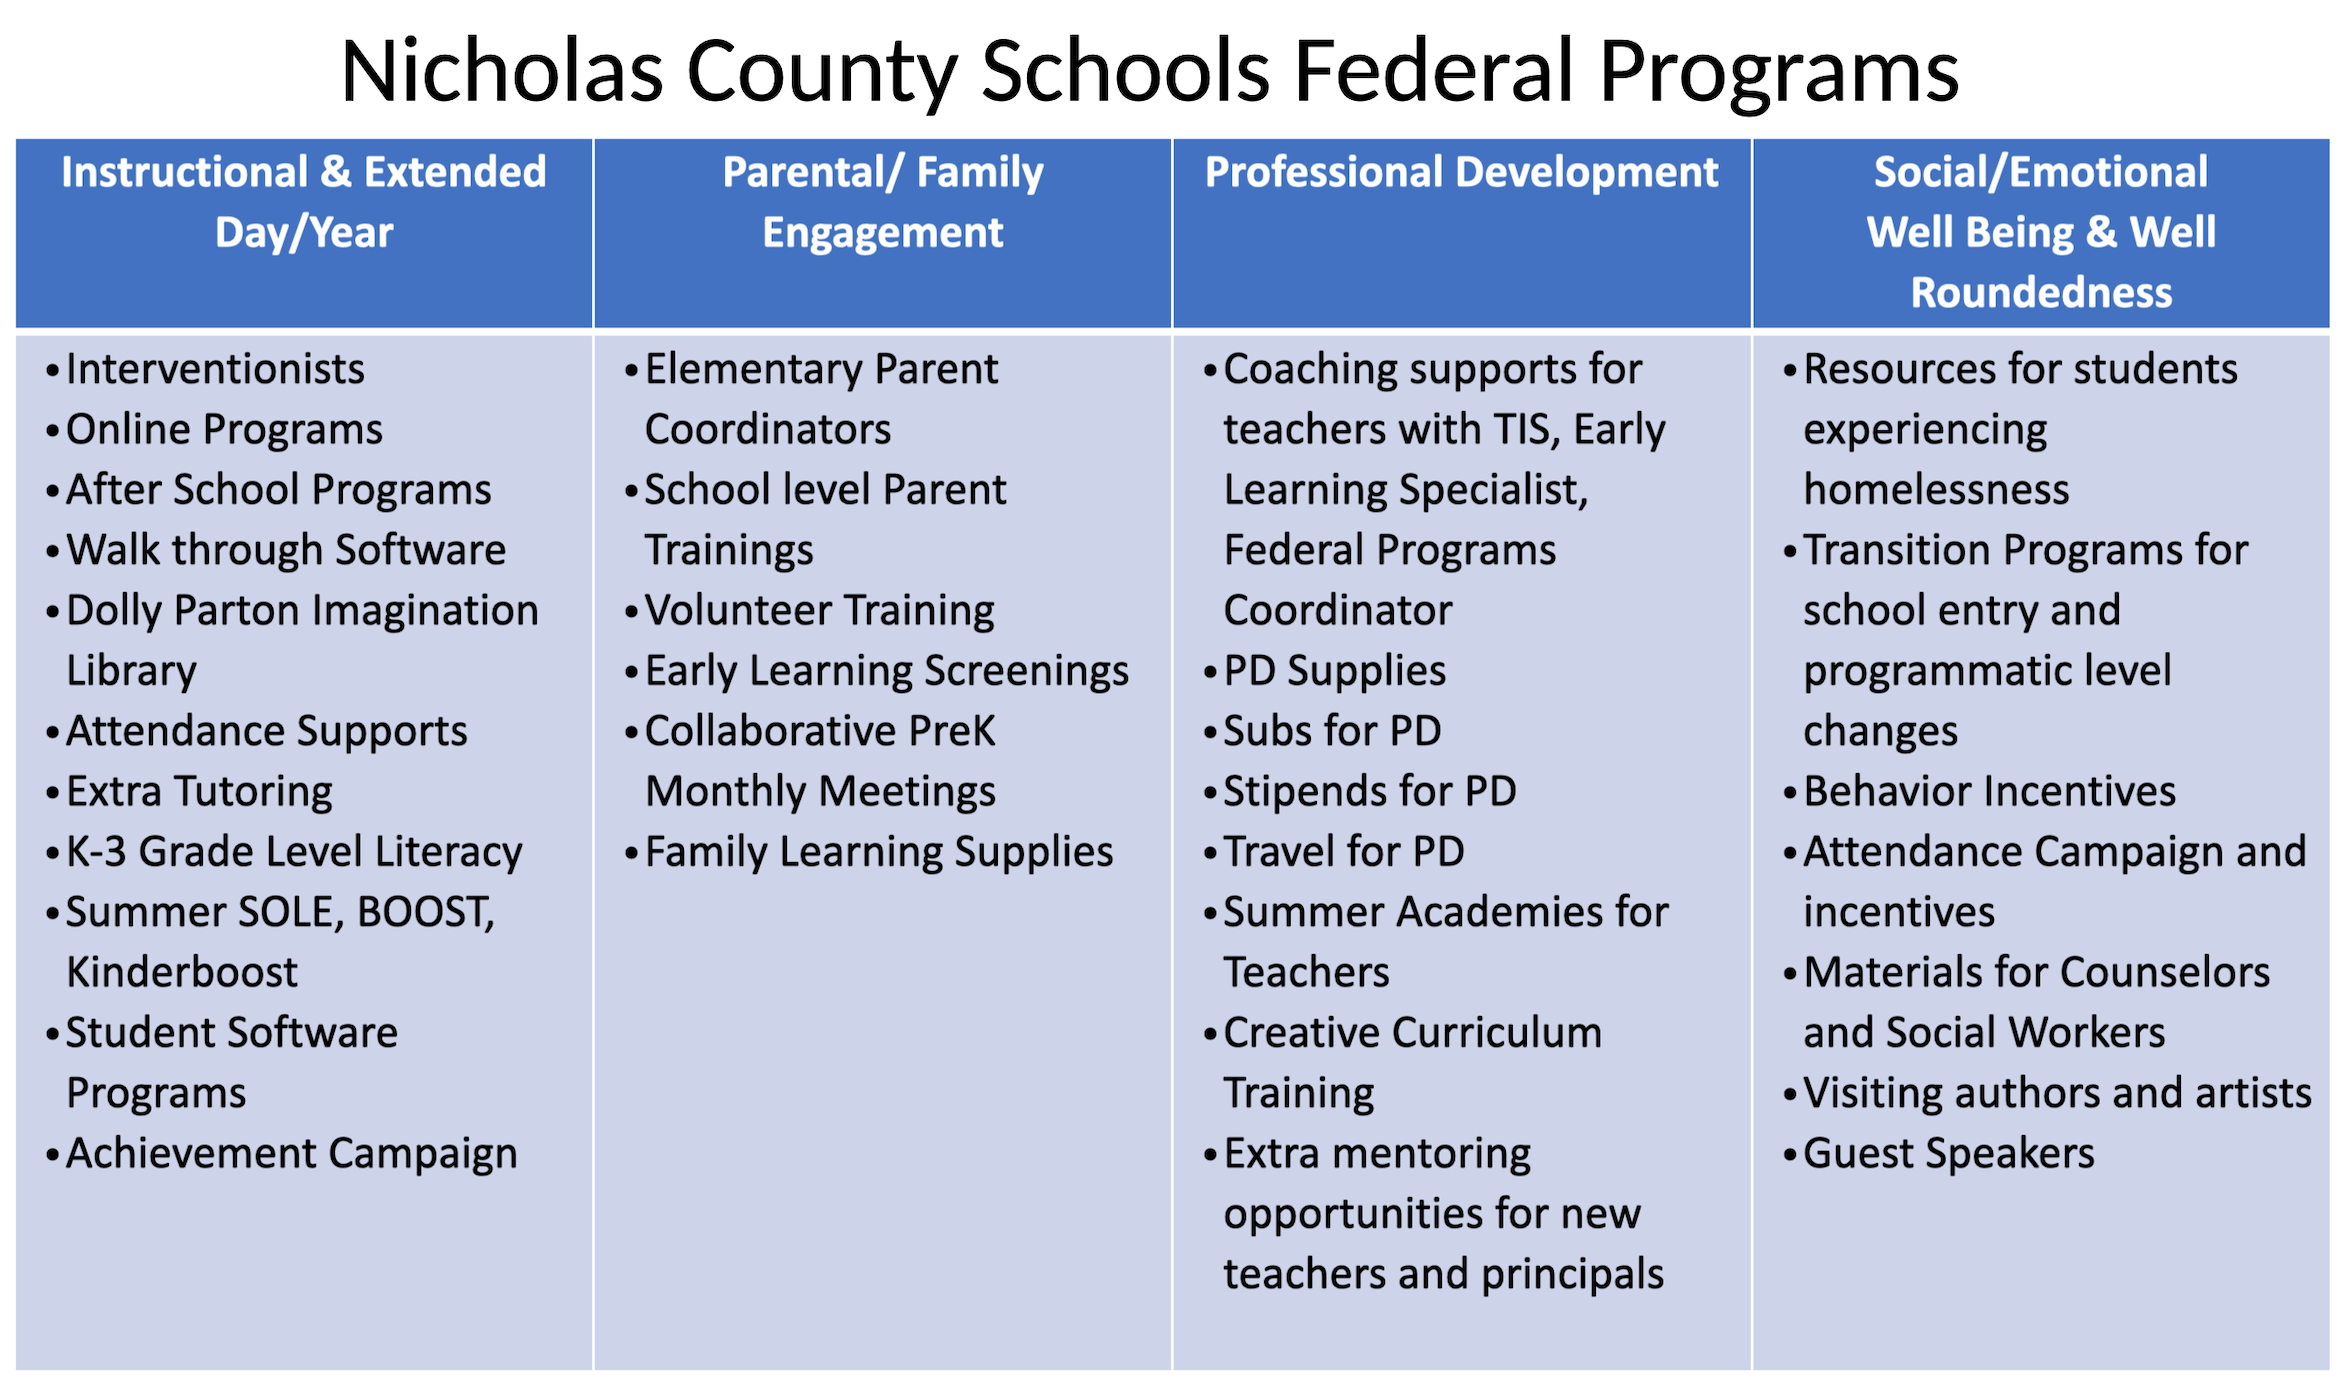 Federal Programs Description